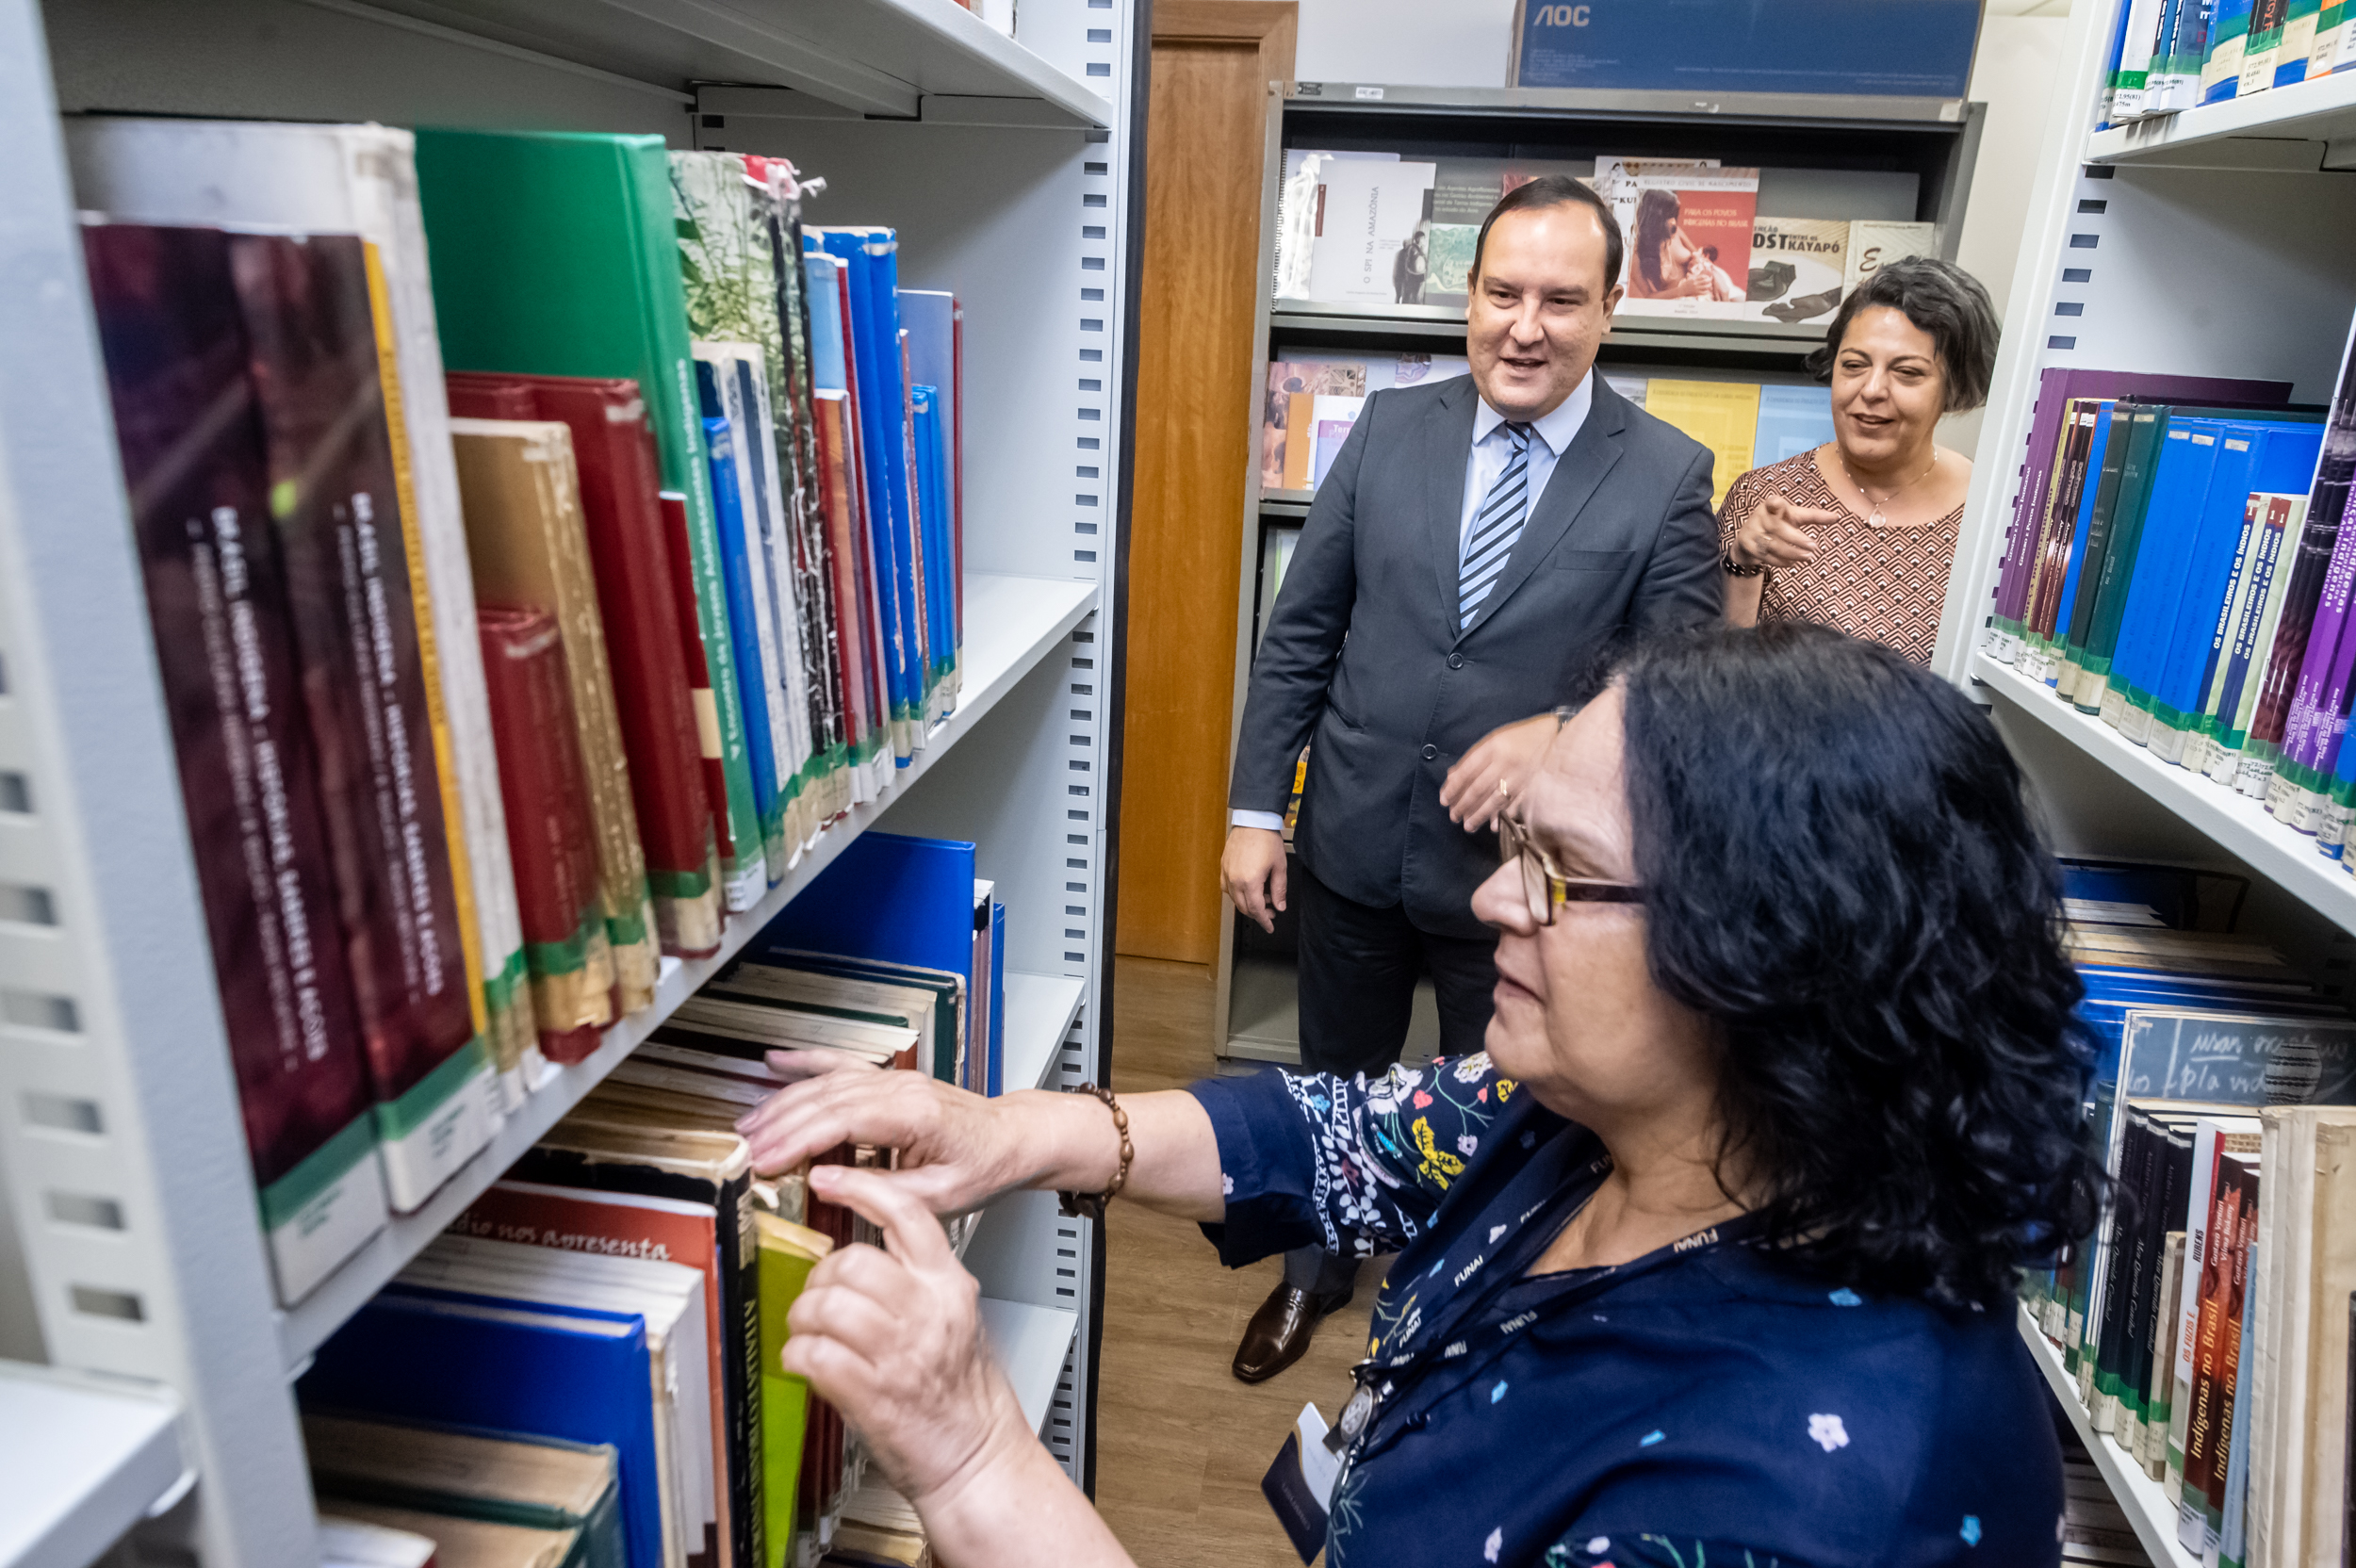 PresidenteMarceloXavier visita BibliotecaCGDOC-Foto MarioVilela-Funai-18